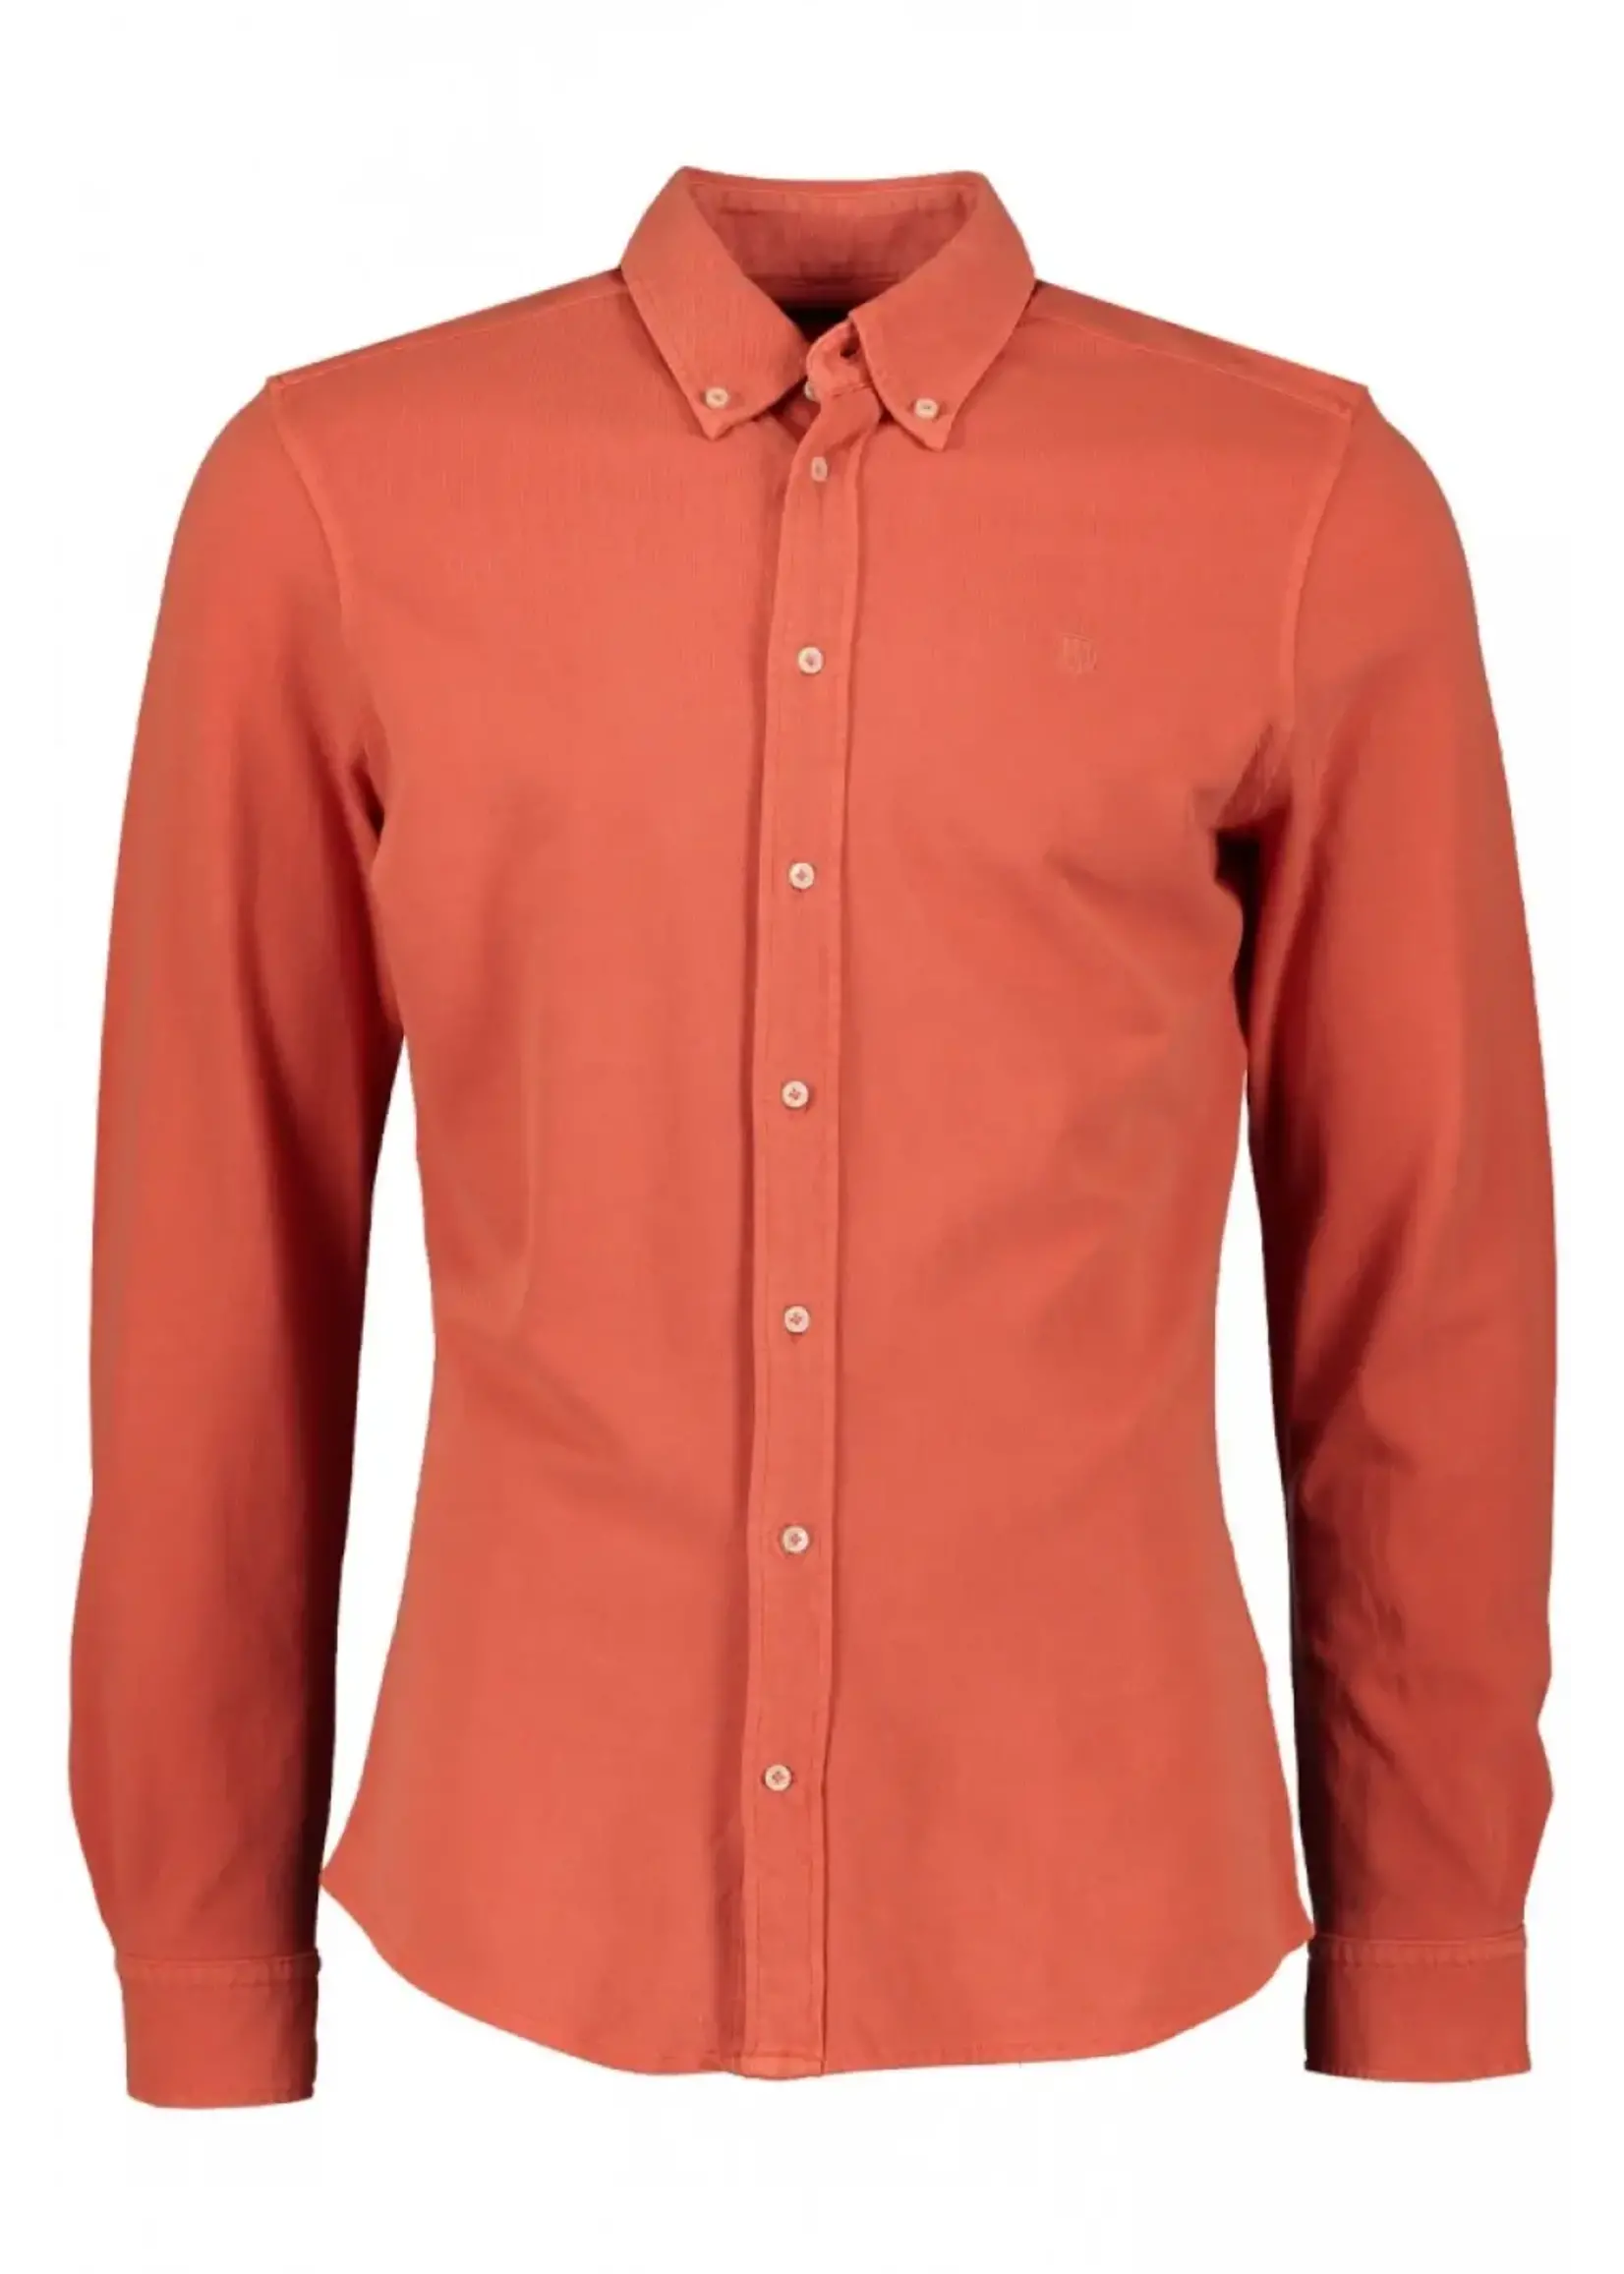 Profuomo shirt button down orange L